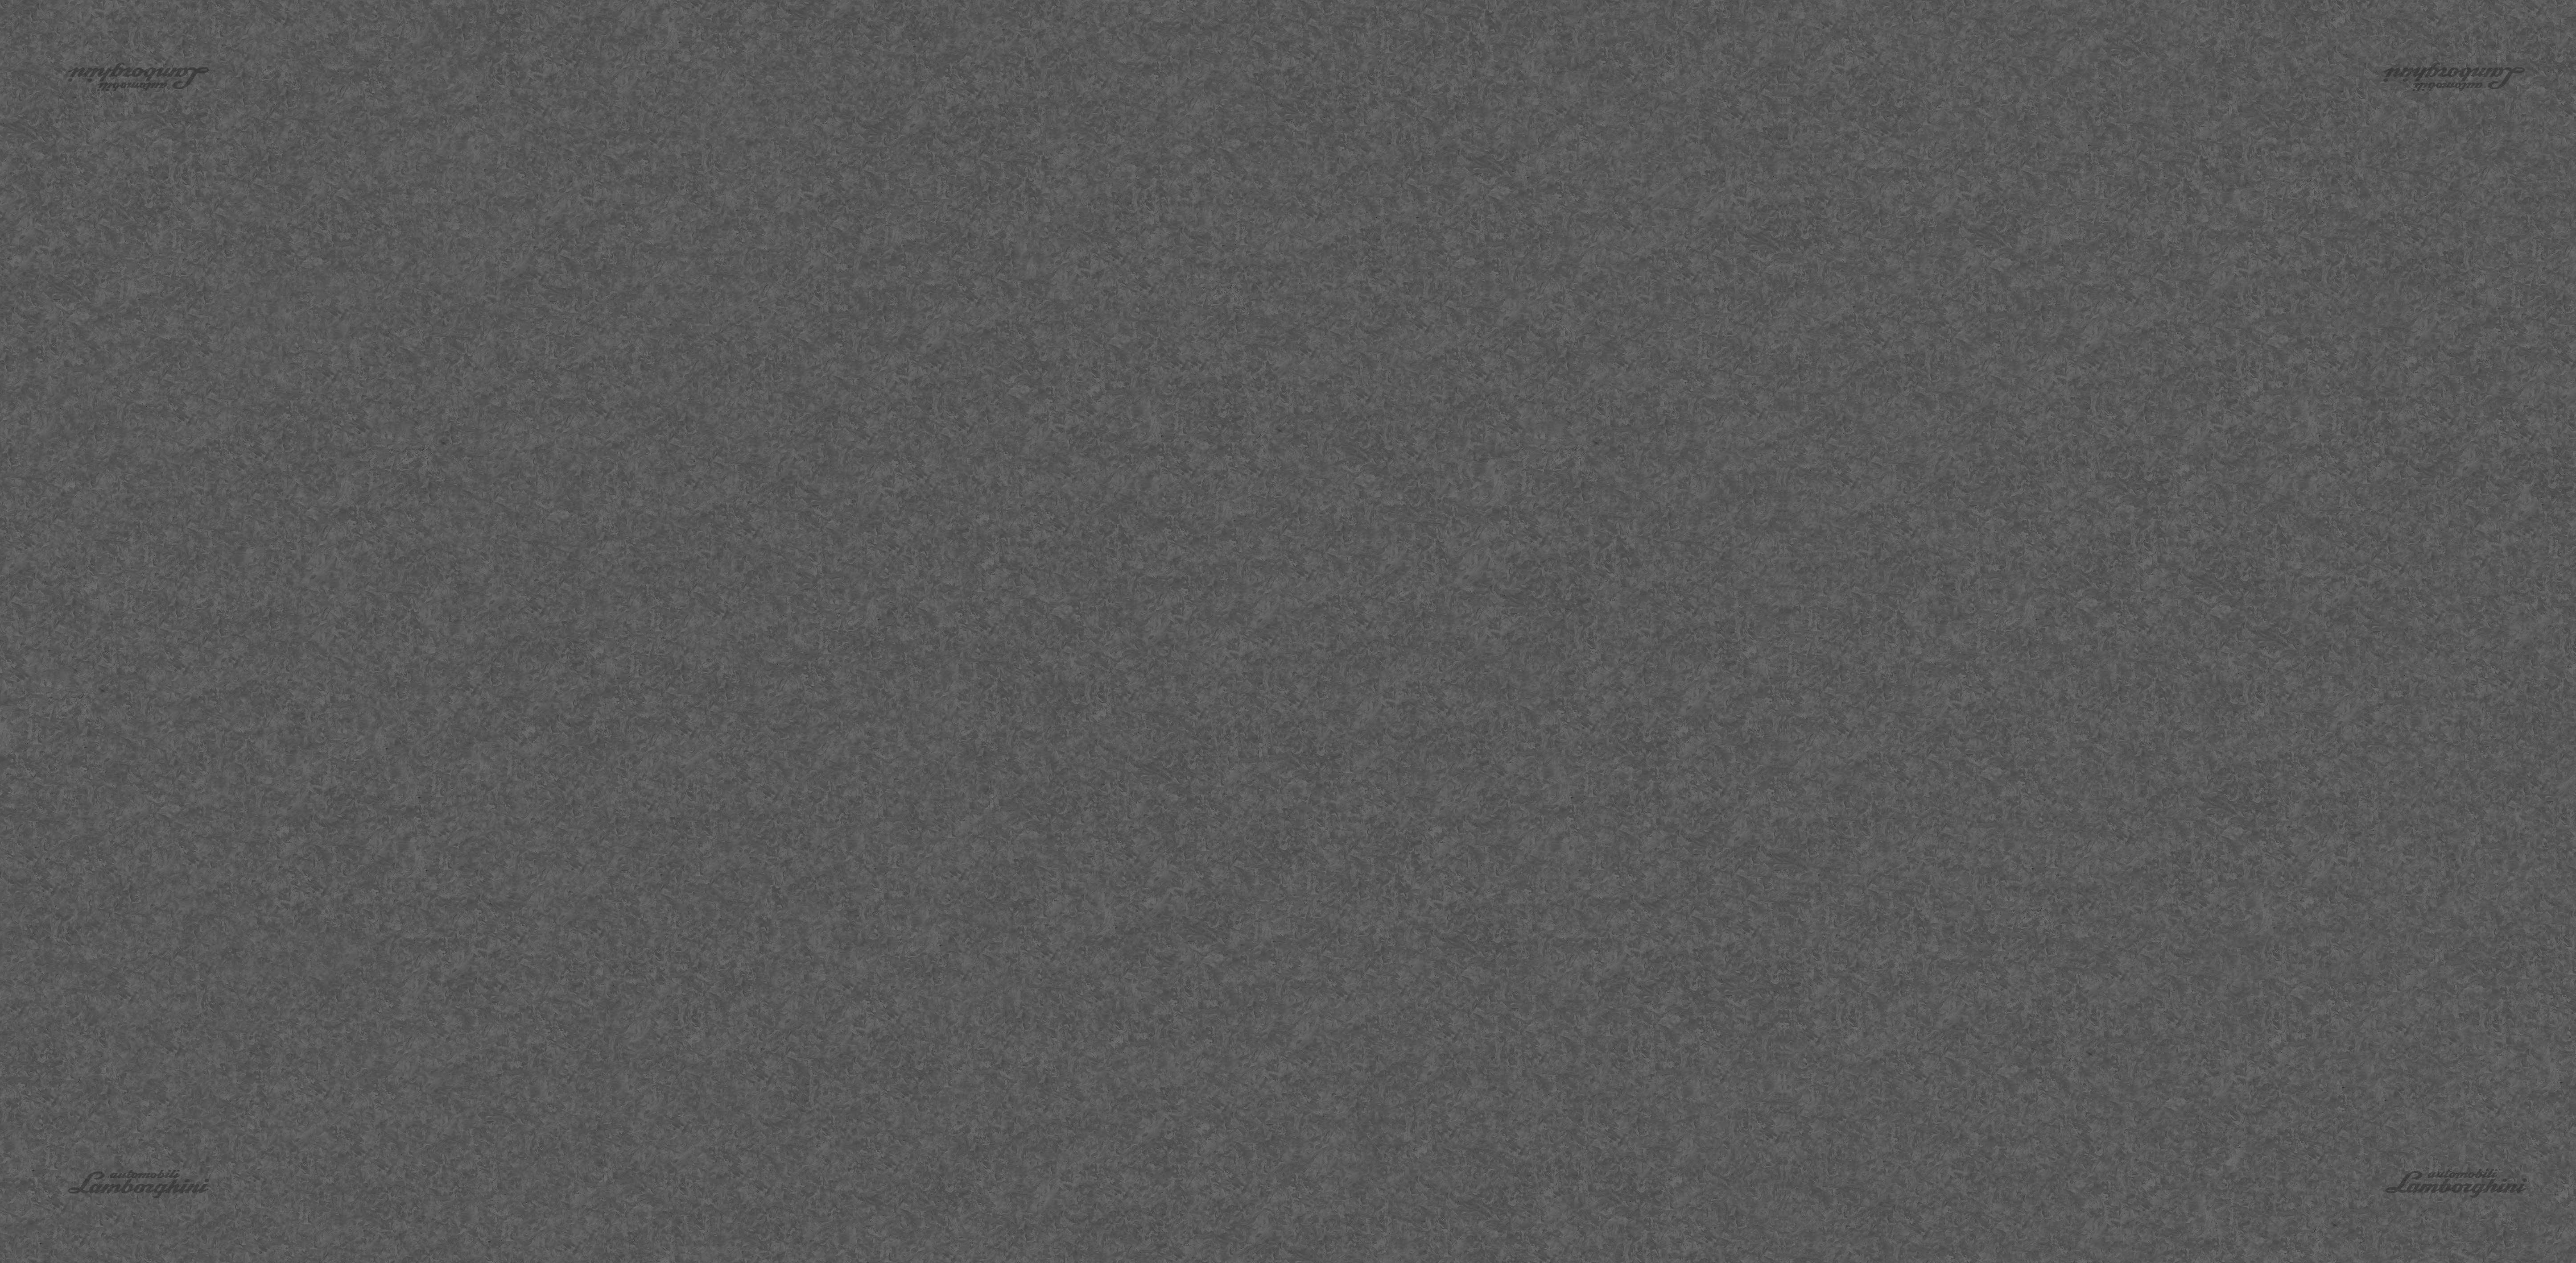 AL07-K-black-暗夜黑12mm.jpg